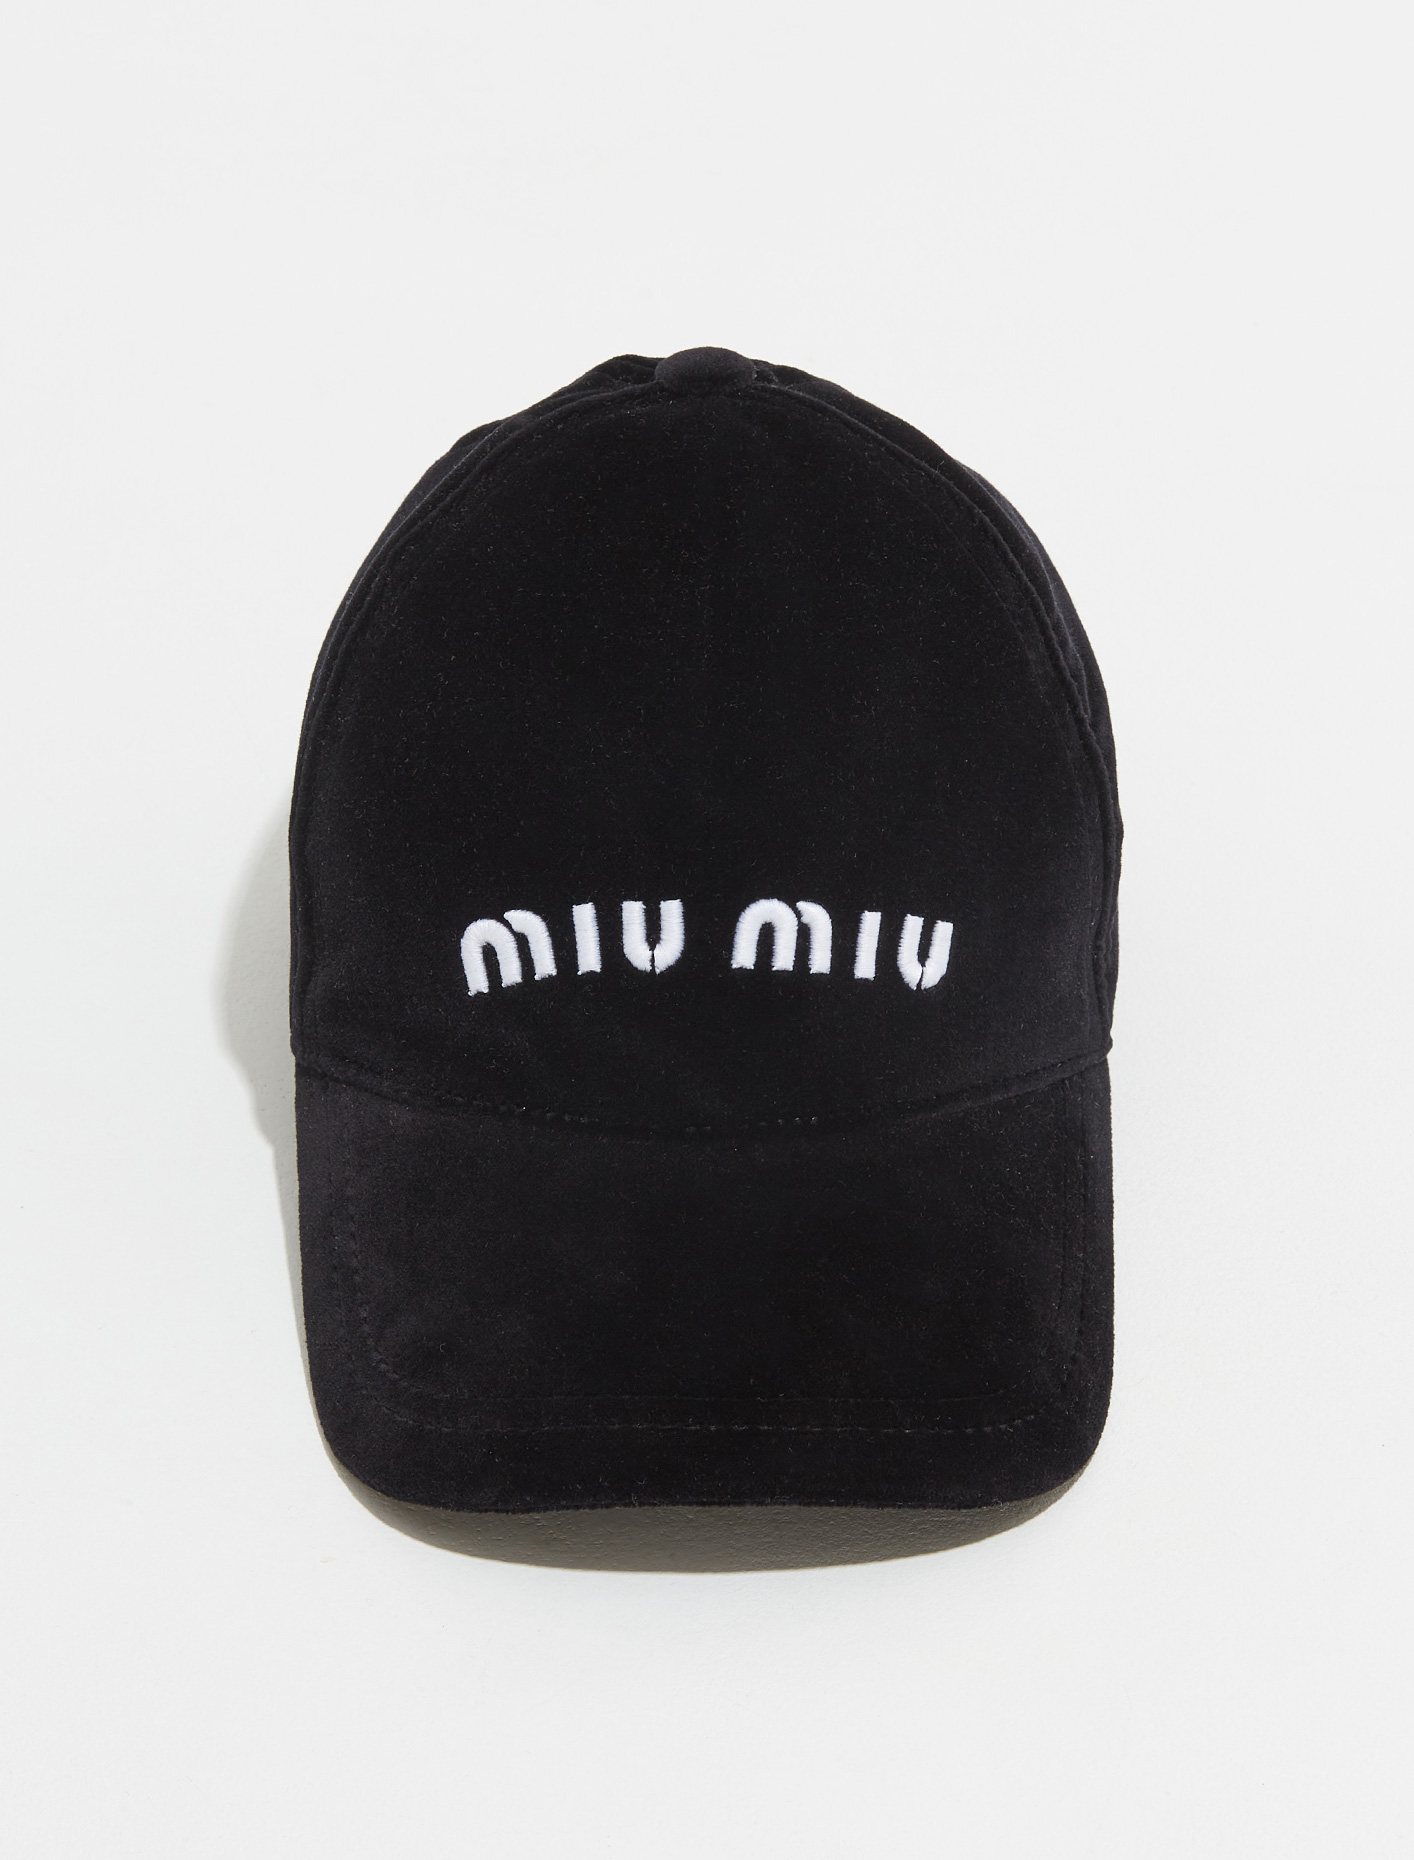 Miu Miu Velvet Baseball Cap in Black | Voo Store Berlin 